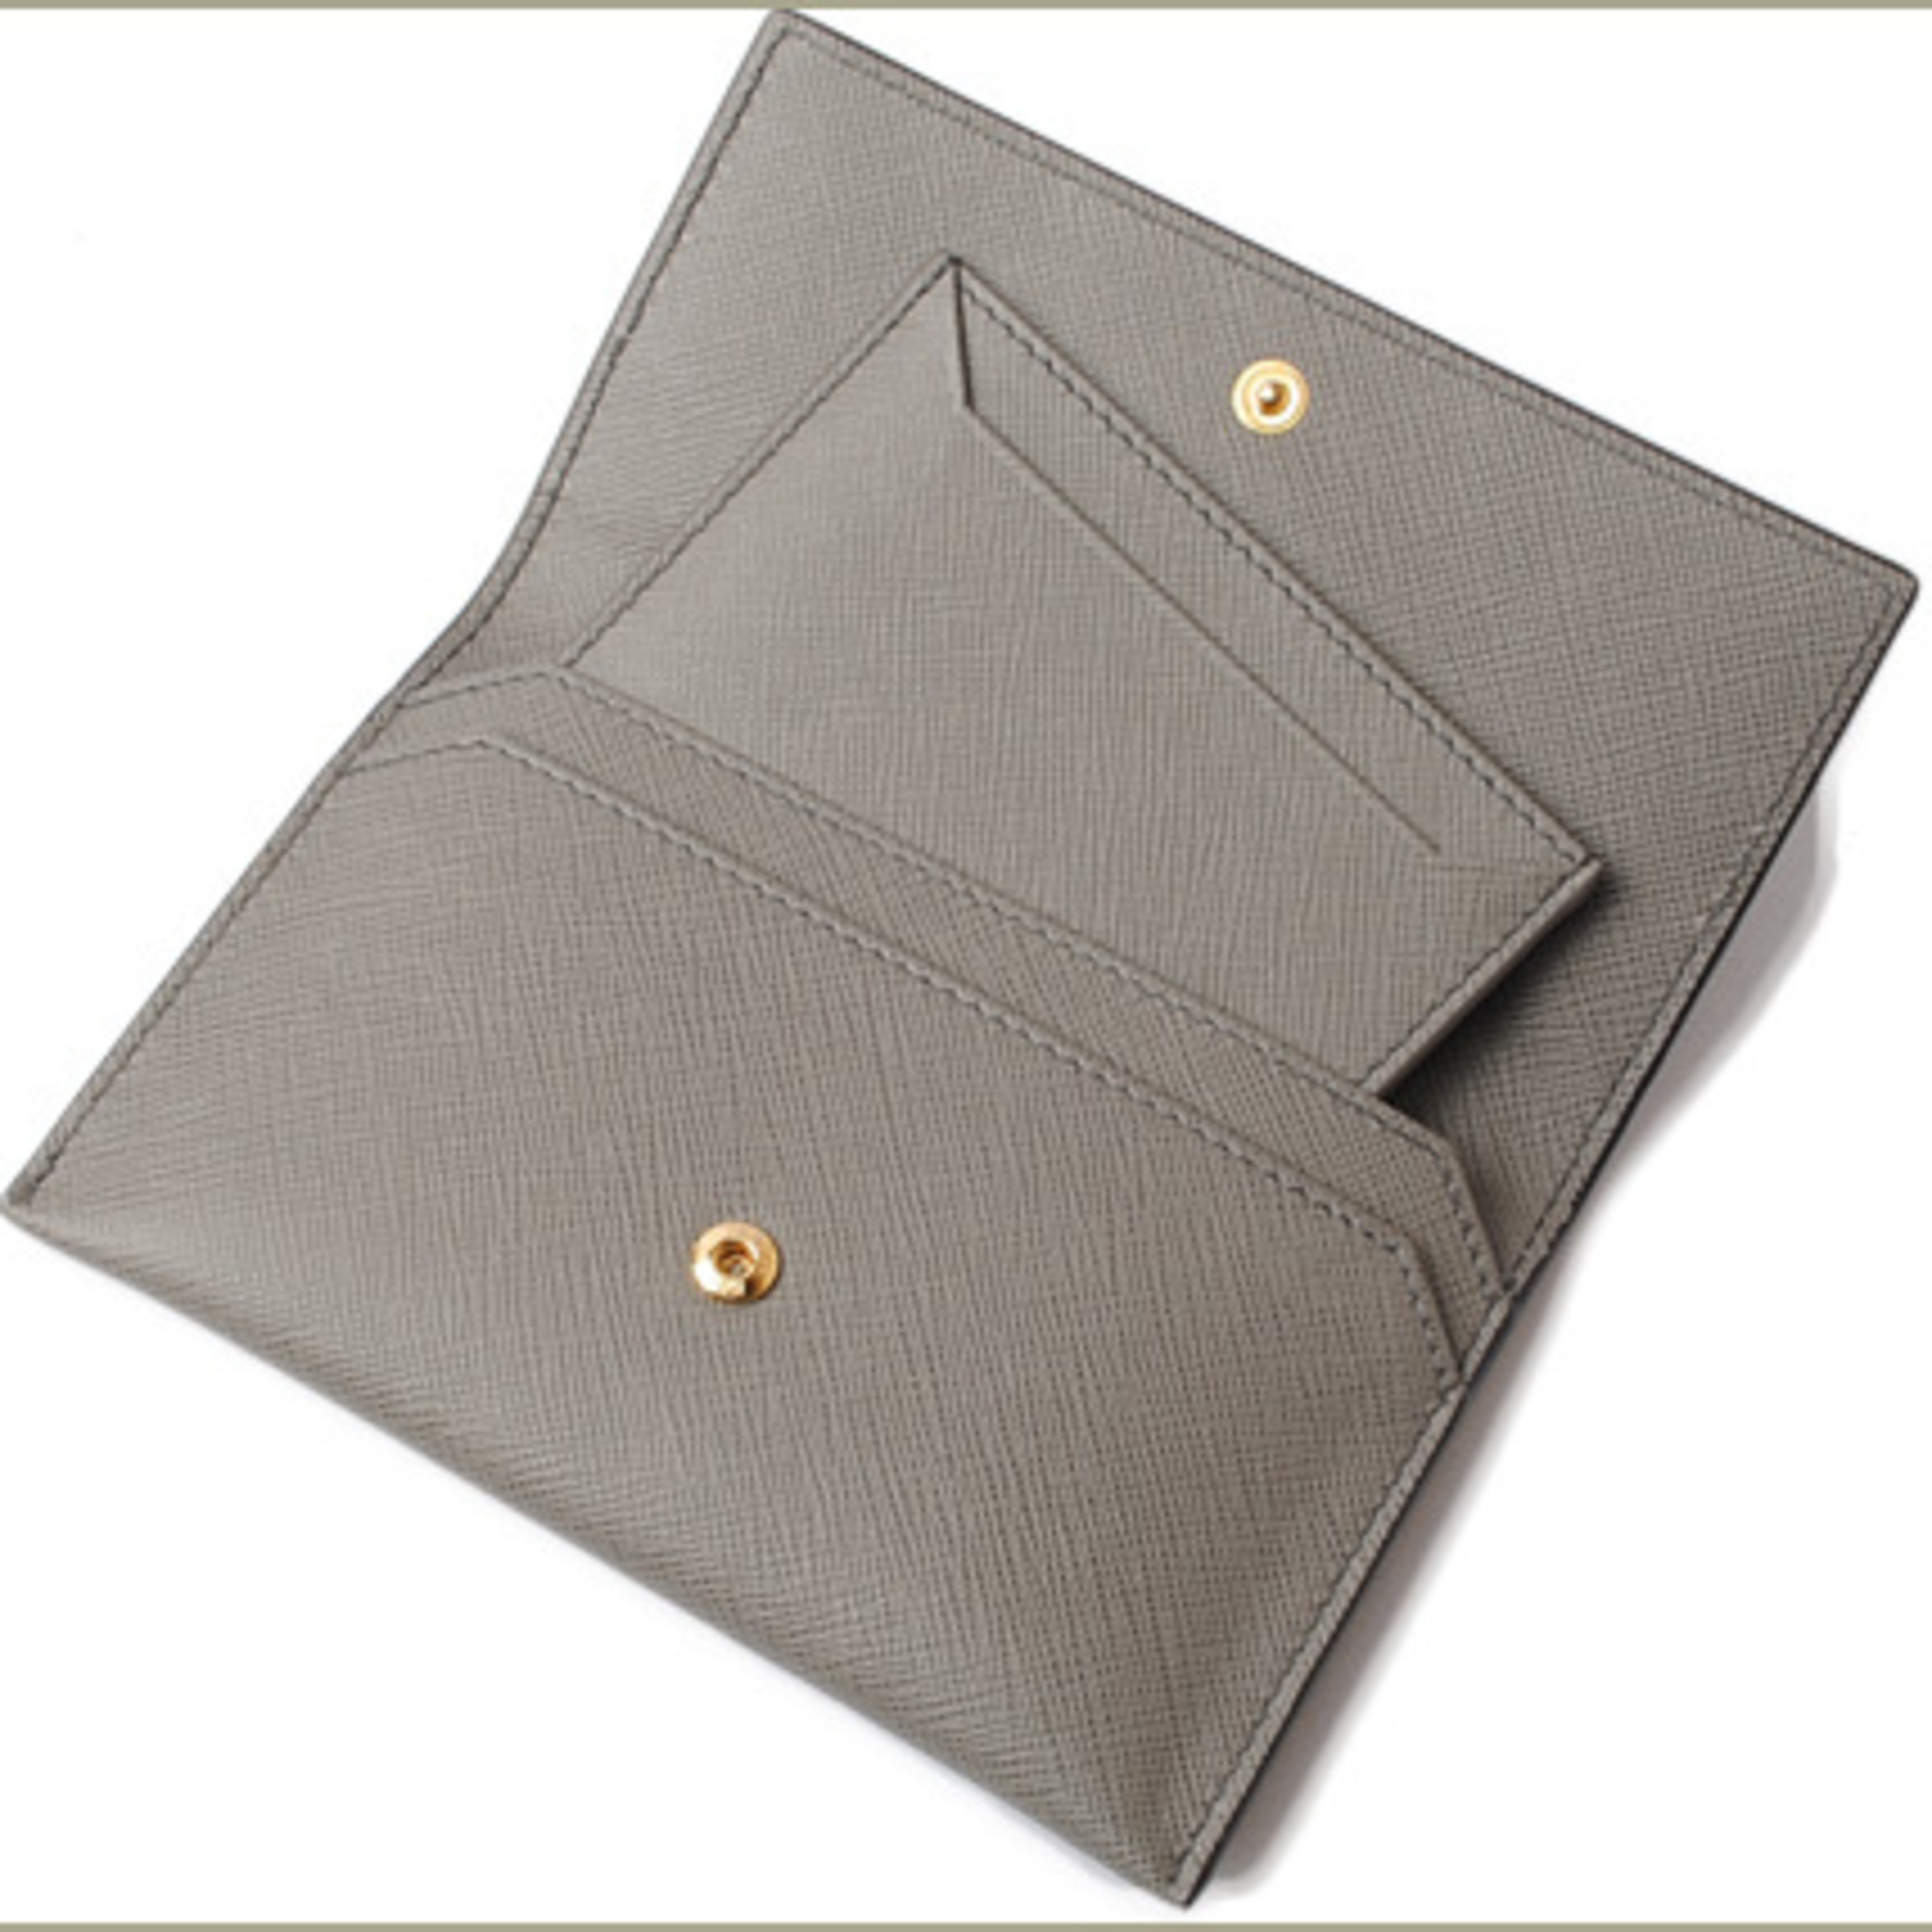 Prada card case folding wallet PRADA 1MC004 SAFFIANO GRECHE embossed leather MARMO ASTRAL gray blue